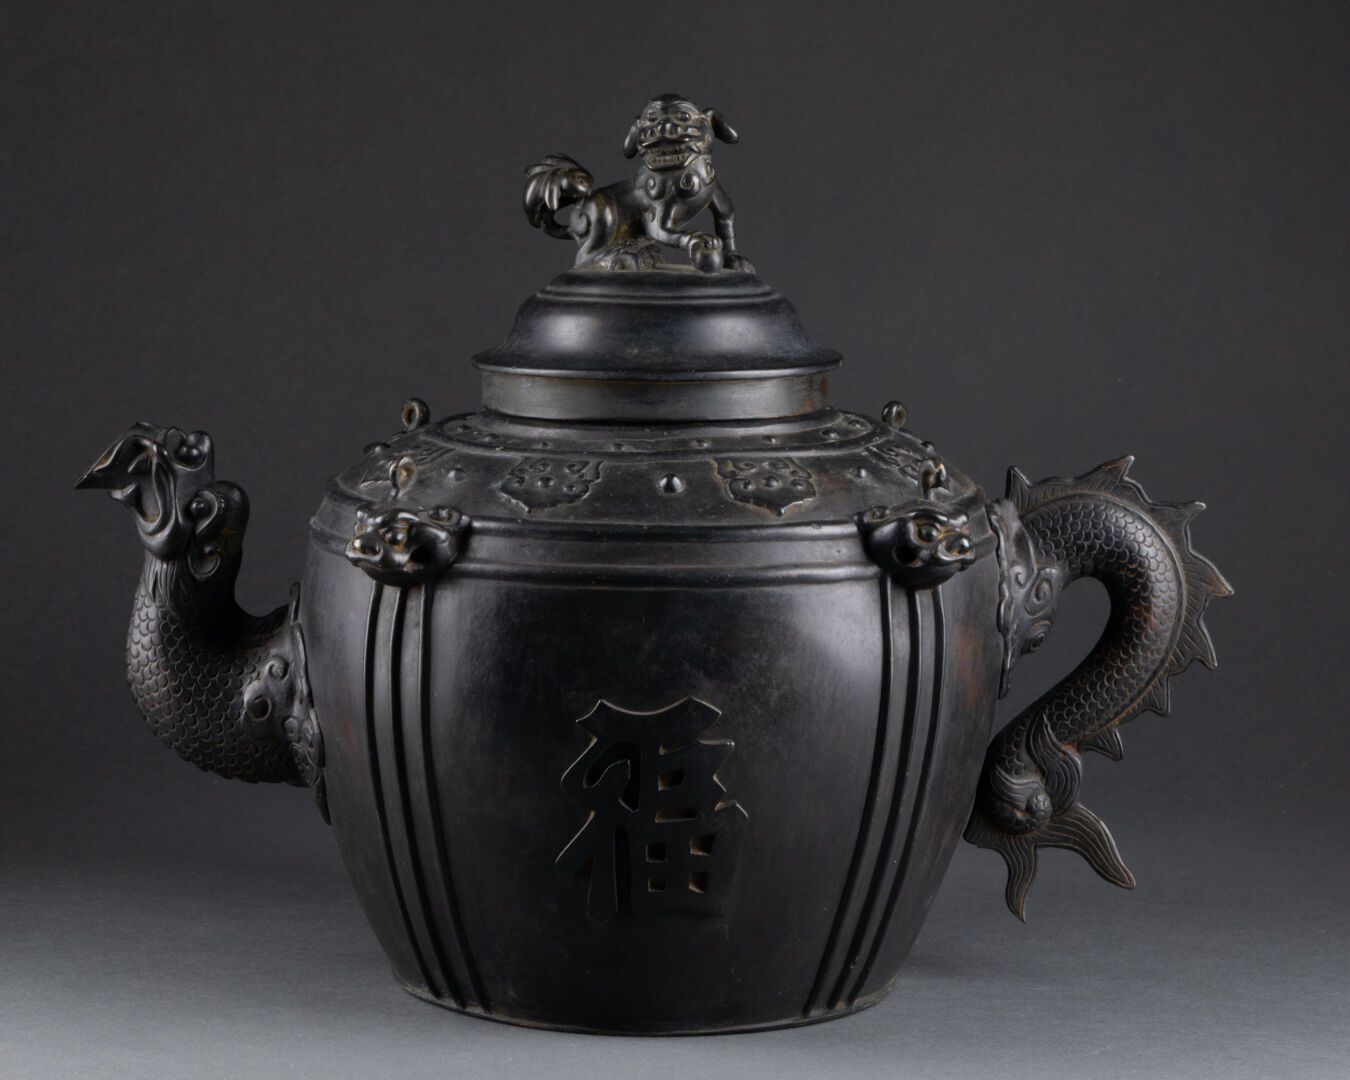 CHINE - XIXe siècle 大茶壶，装饰有象形文字、如意和佛狗。 
龙形的手柄 
带有黑色铜锈的青铜器 
H.27 cm - L. 37 cm